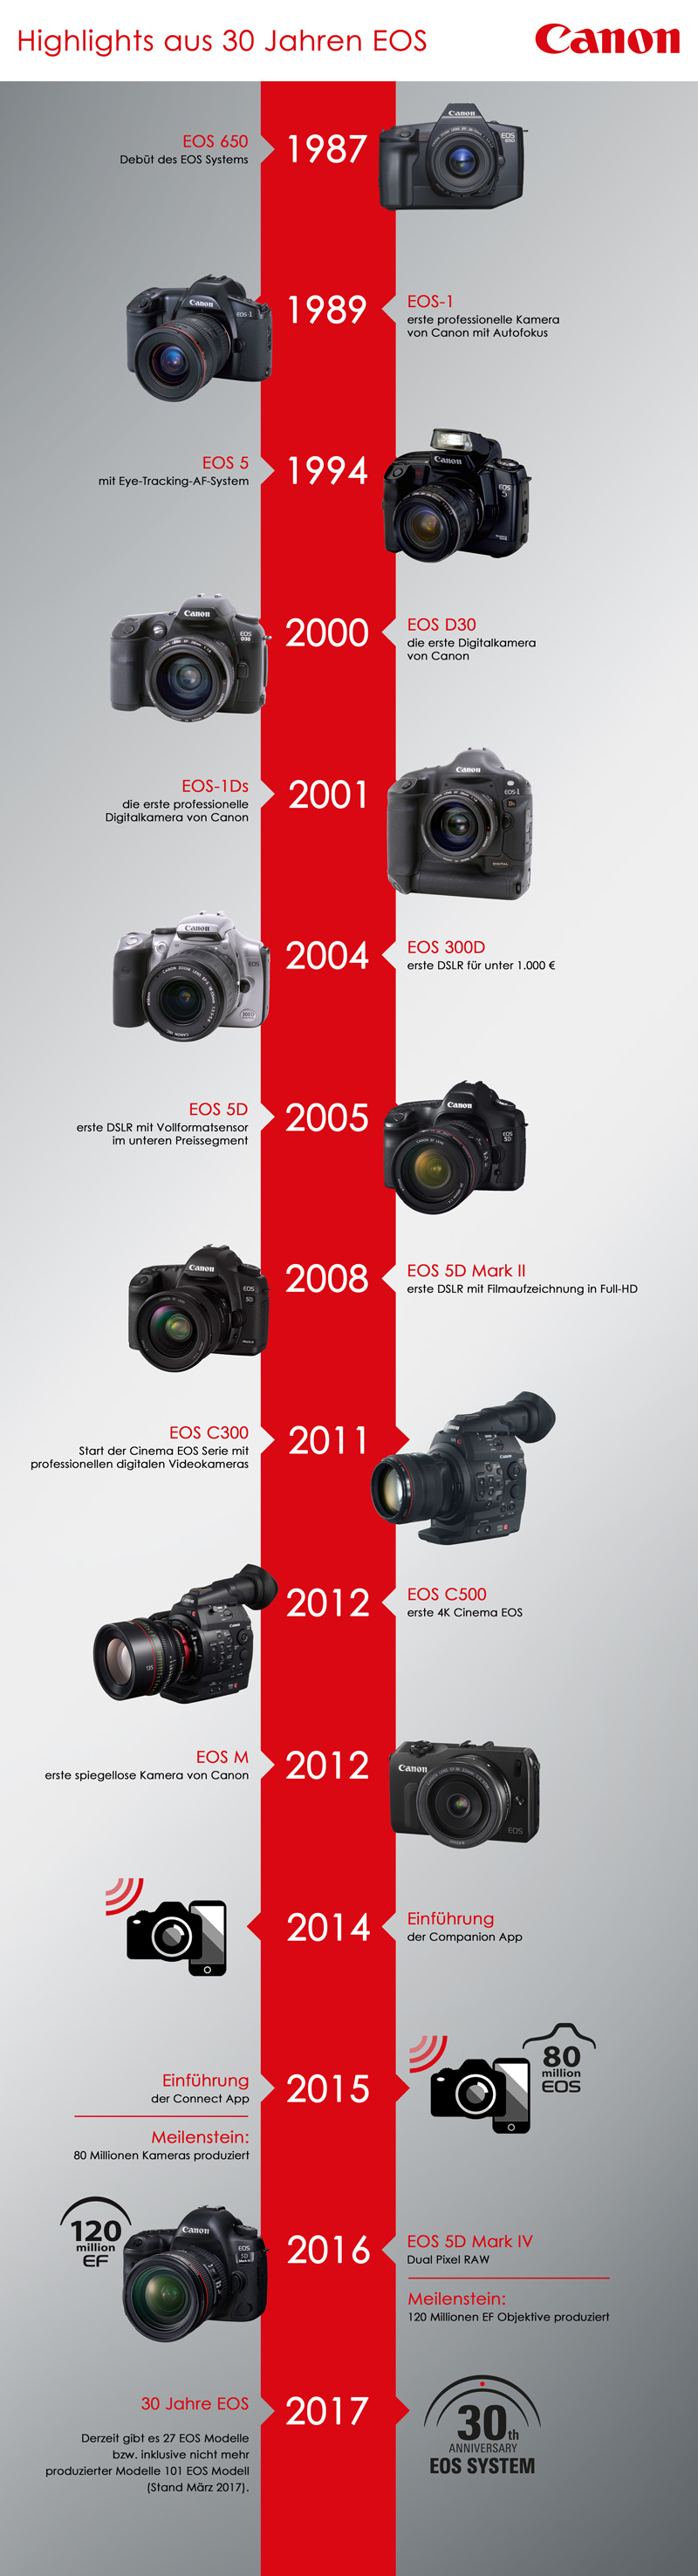 Canon EOS Timeline